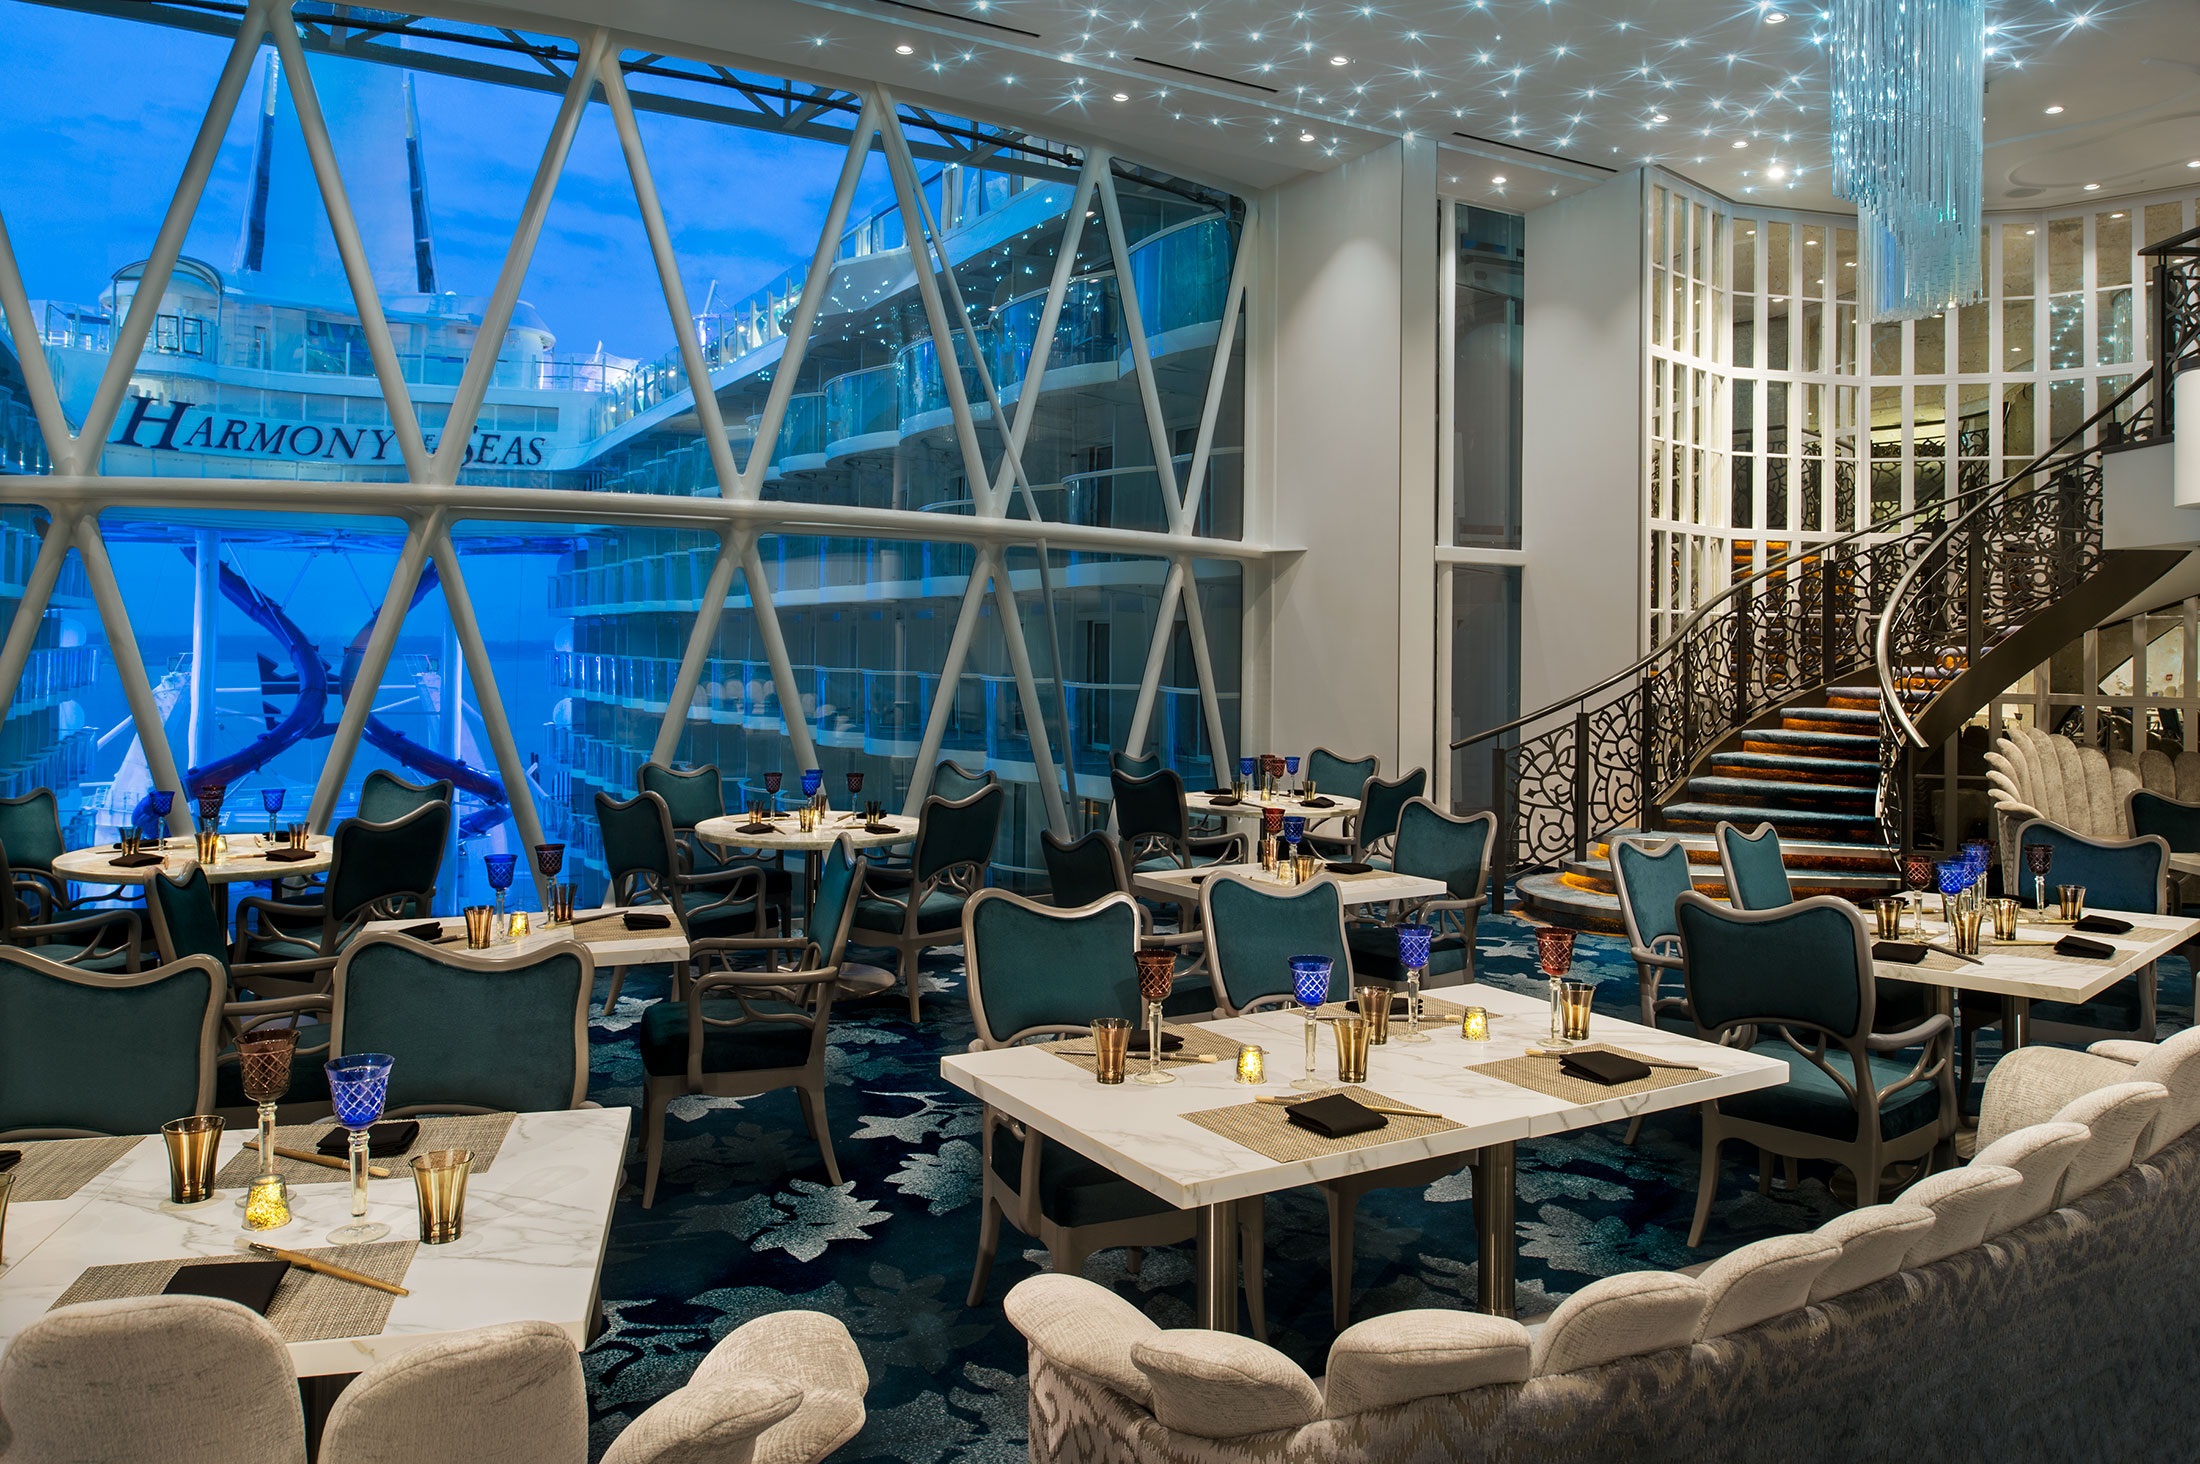 A Royal Caribbean cruise ship's restaurant